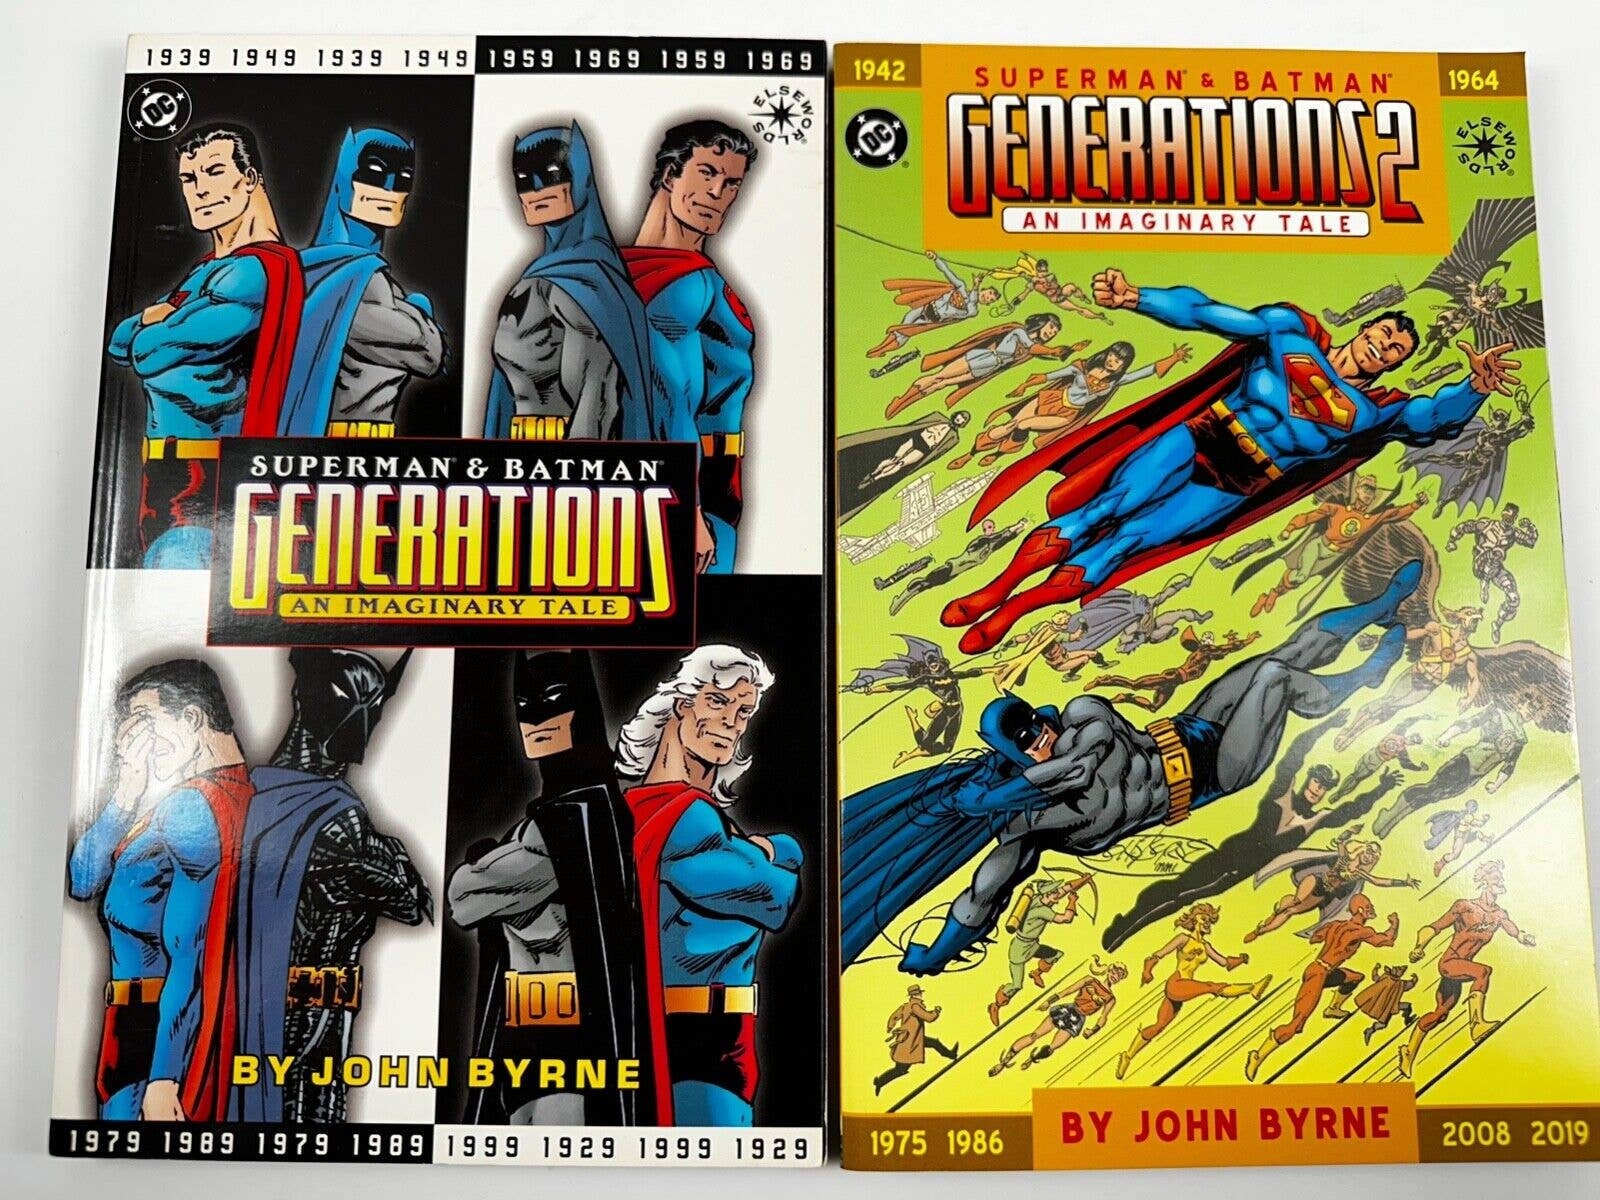 Batman Magnetic Drawing Board Kit And Educational Comic Book For Kids DC  Comics